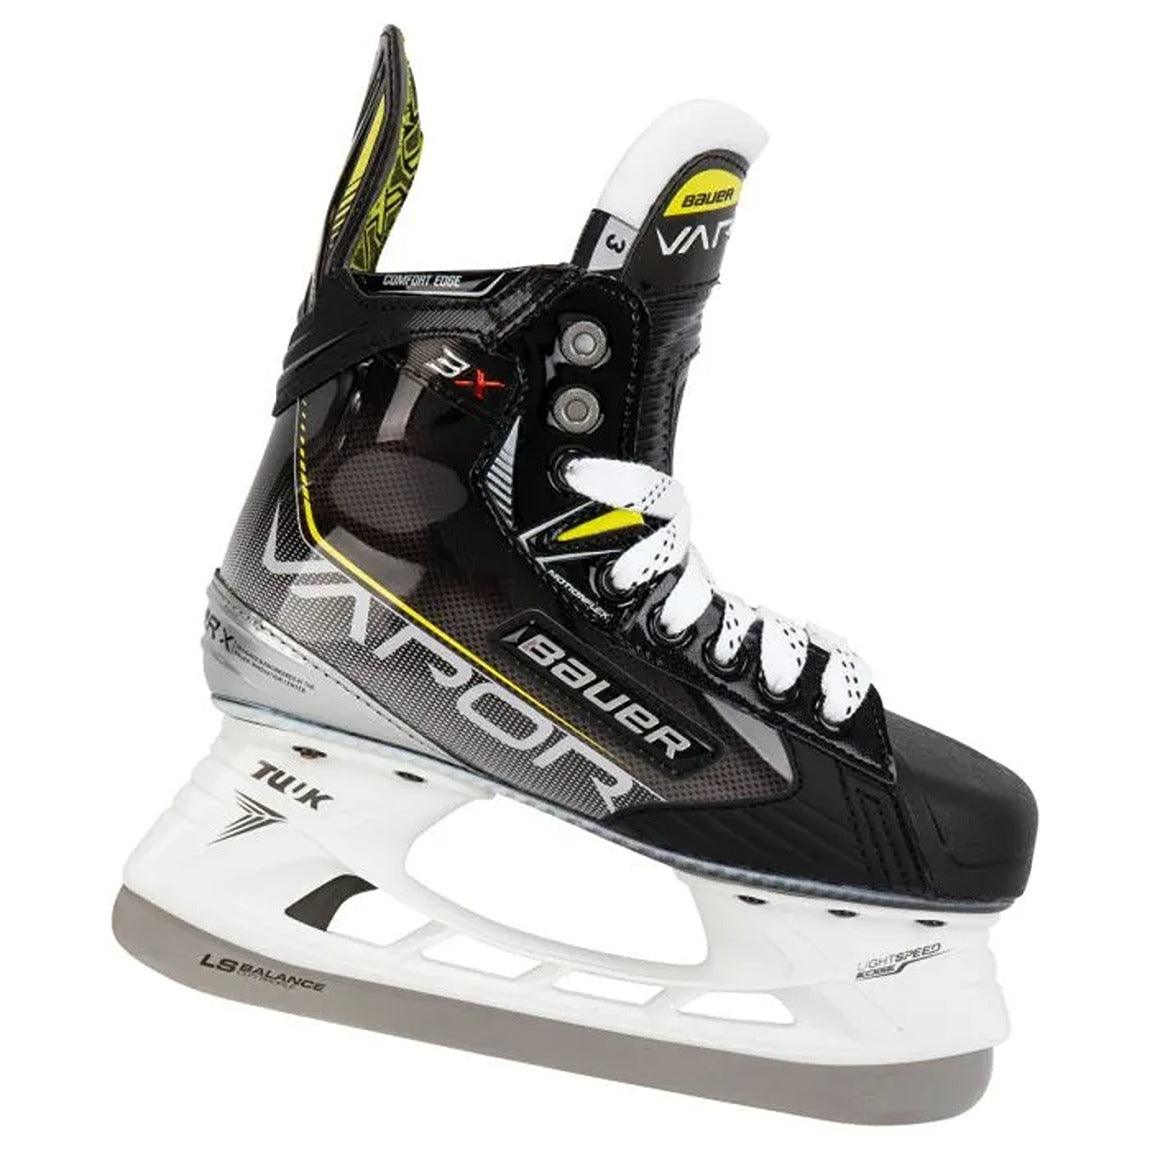 Vapor 3X Hockey Skate - Junior - Sports Excellence